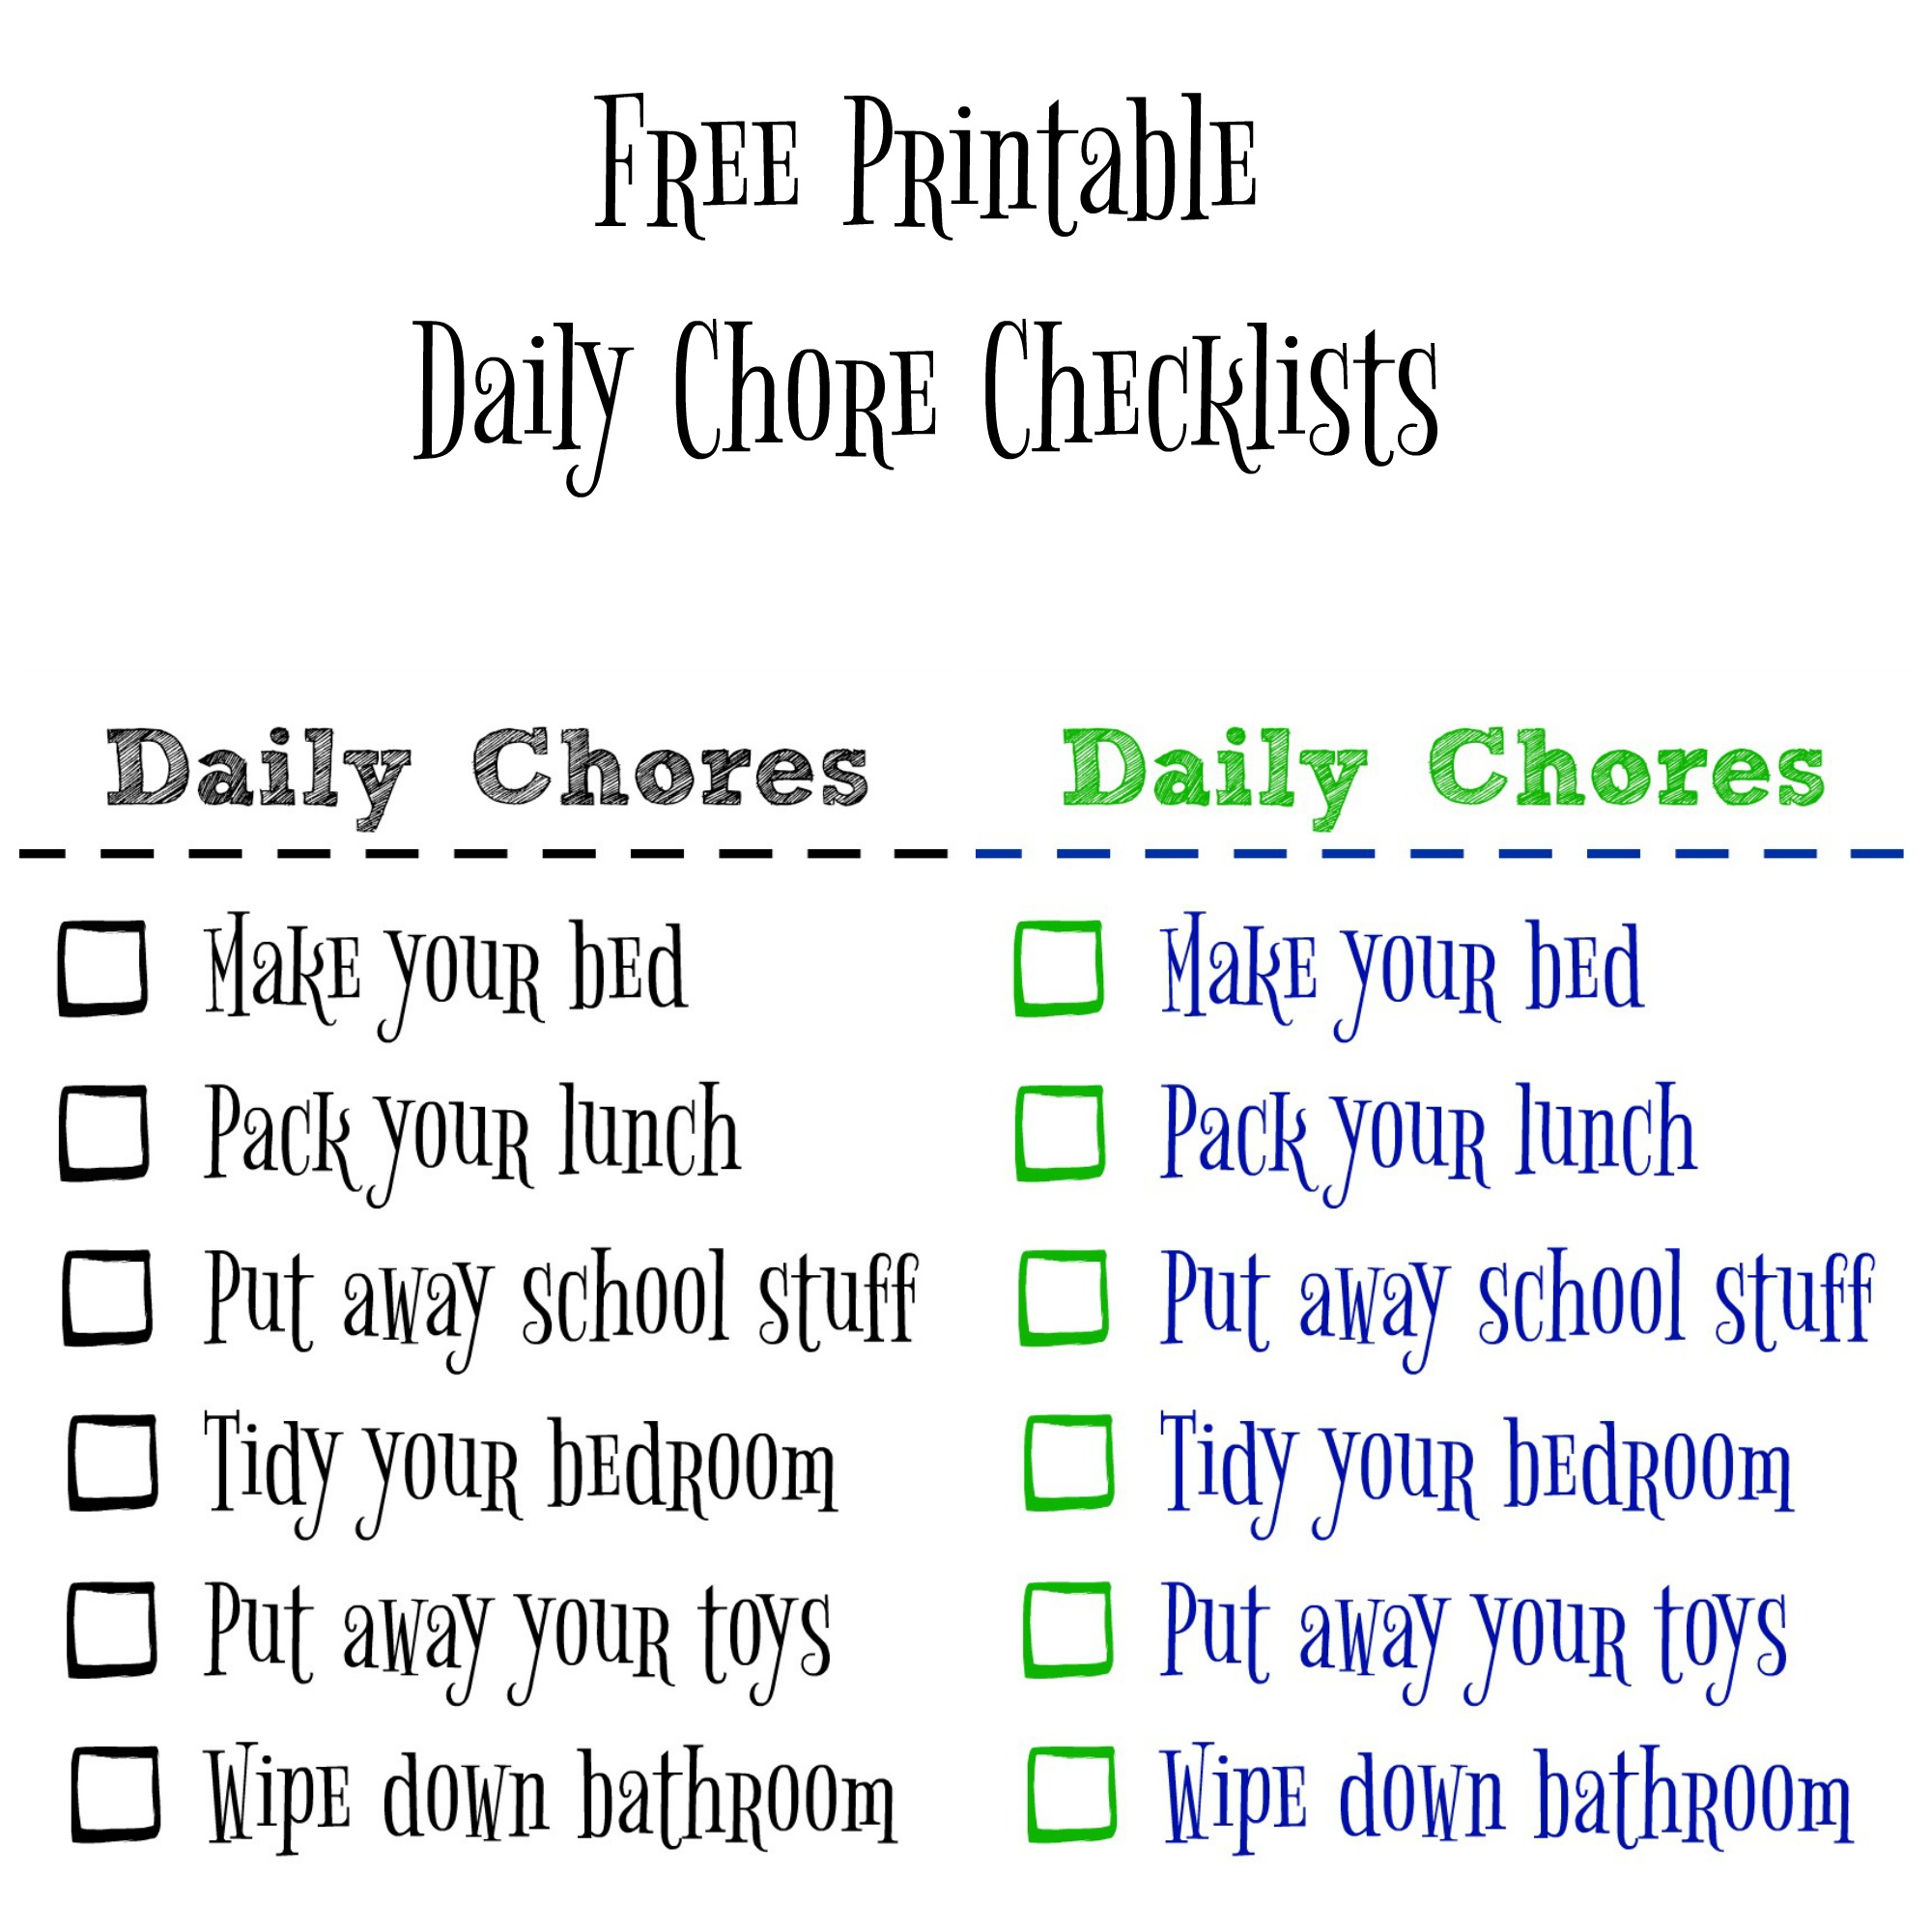 printable weekly chore calendar